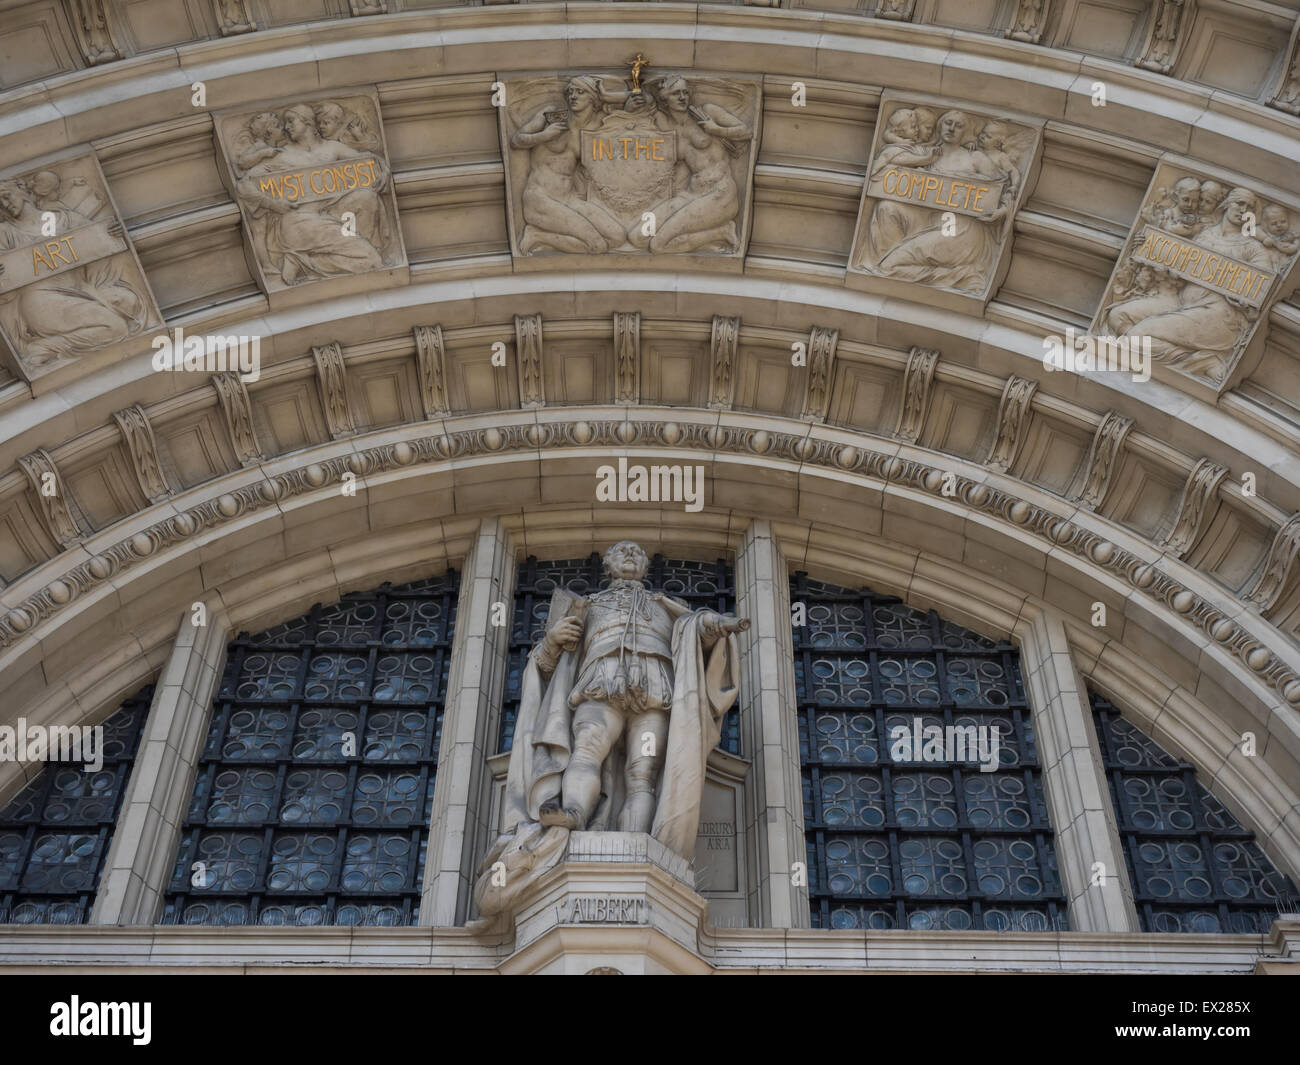 Victoria and Albert Museum, London, England Stock Photo